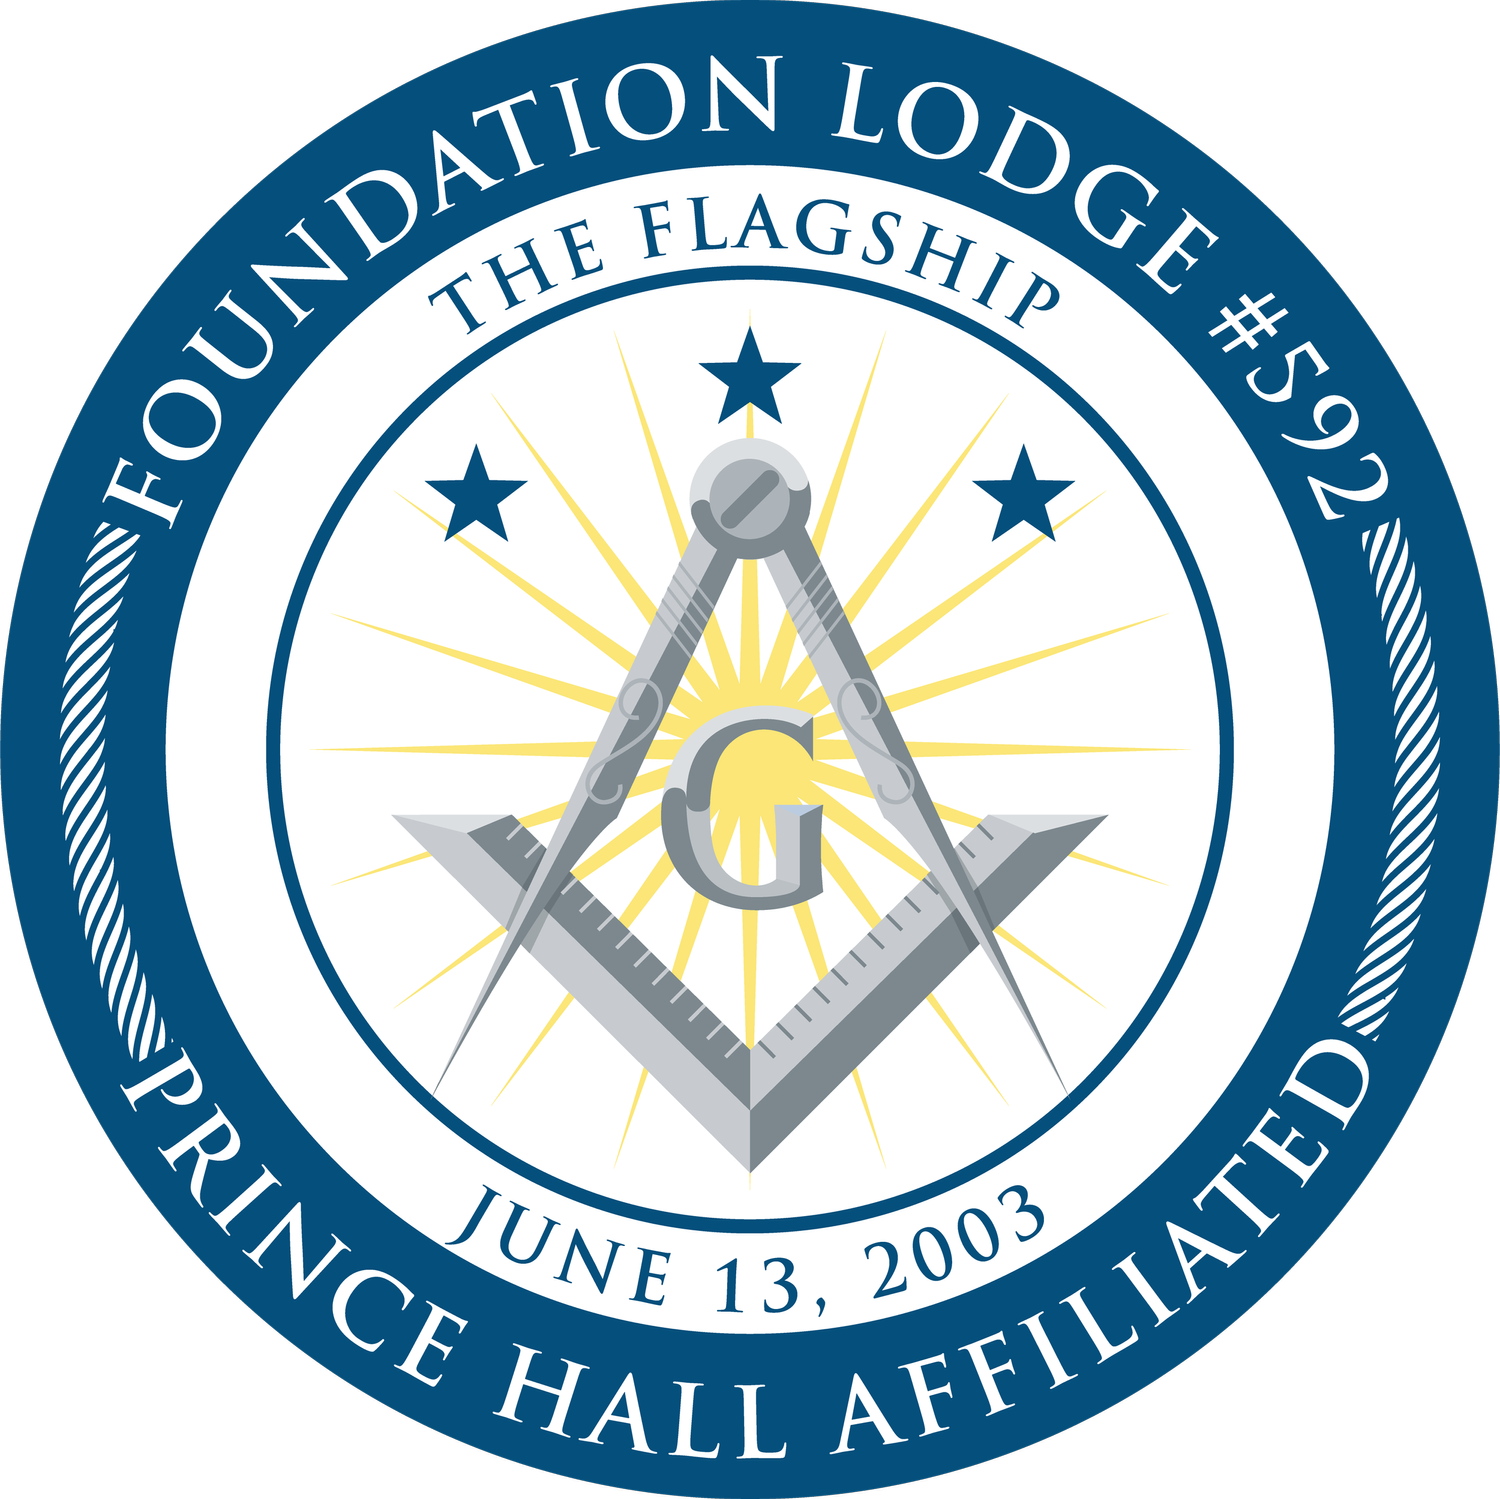 Foundation Lodge #592